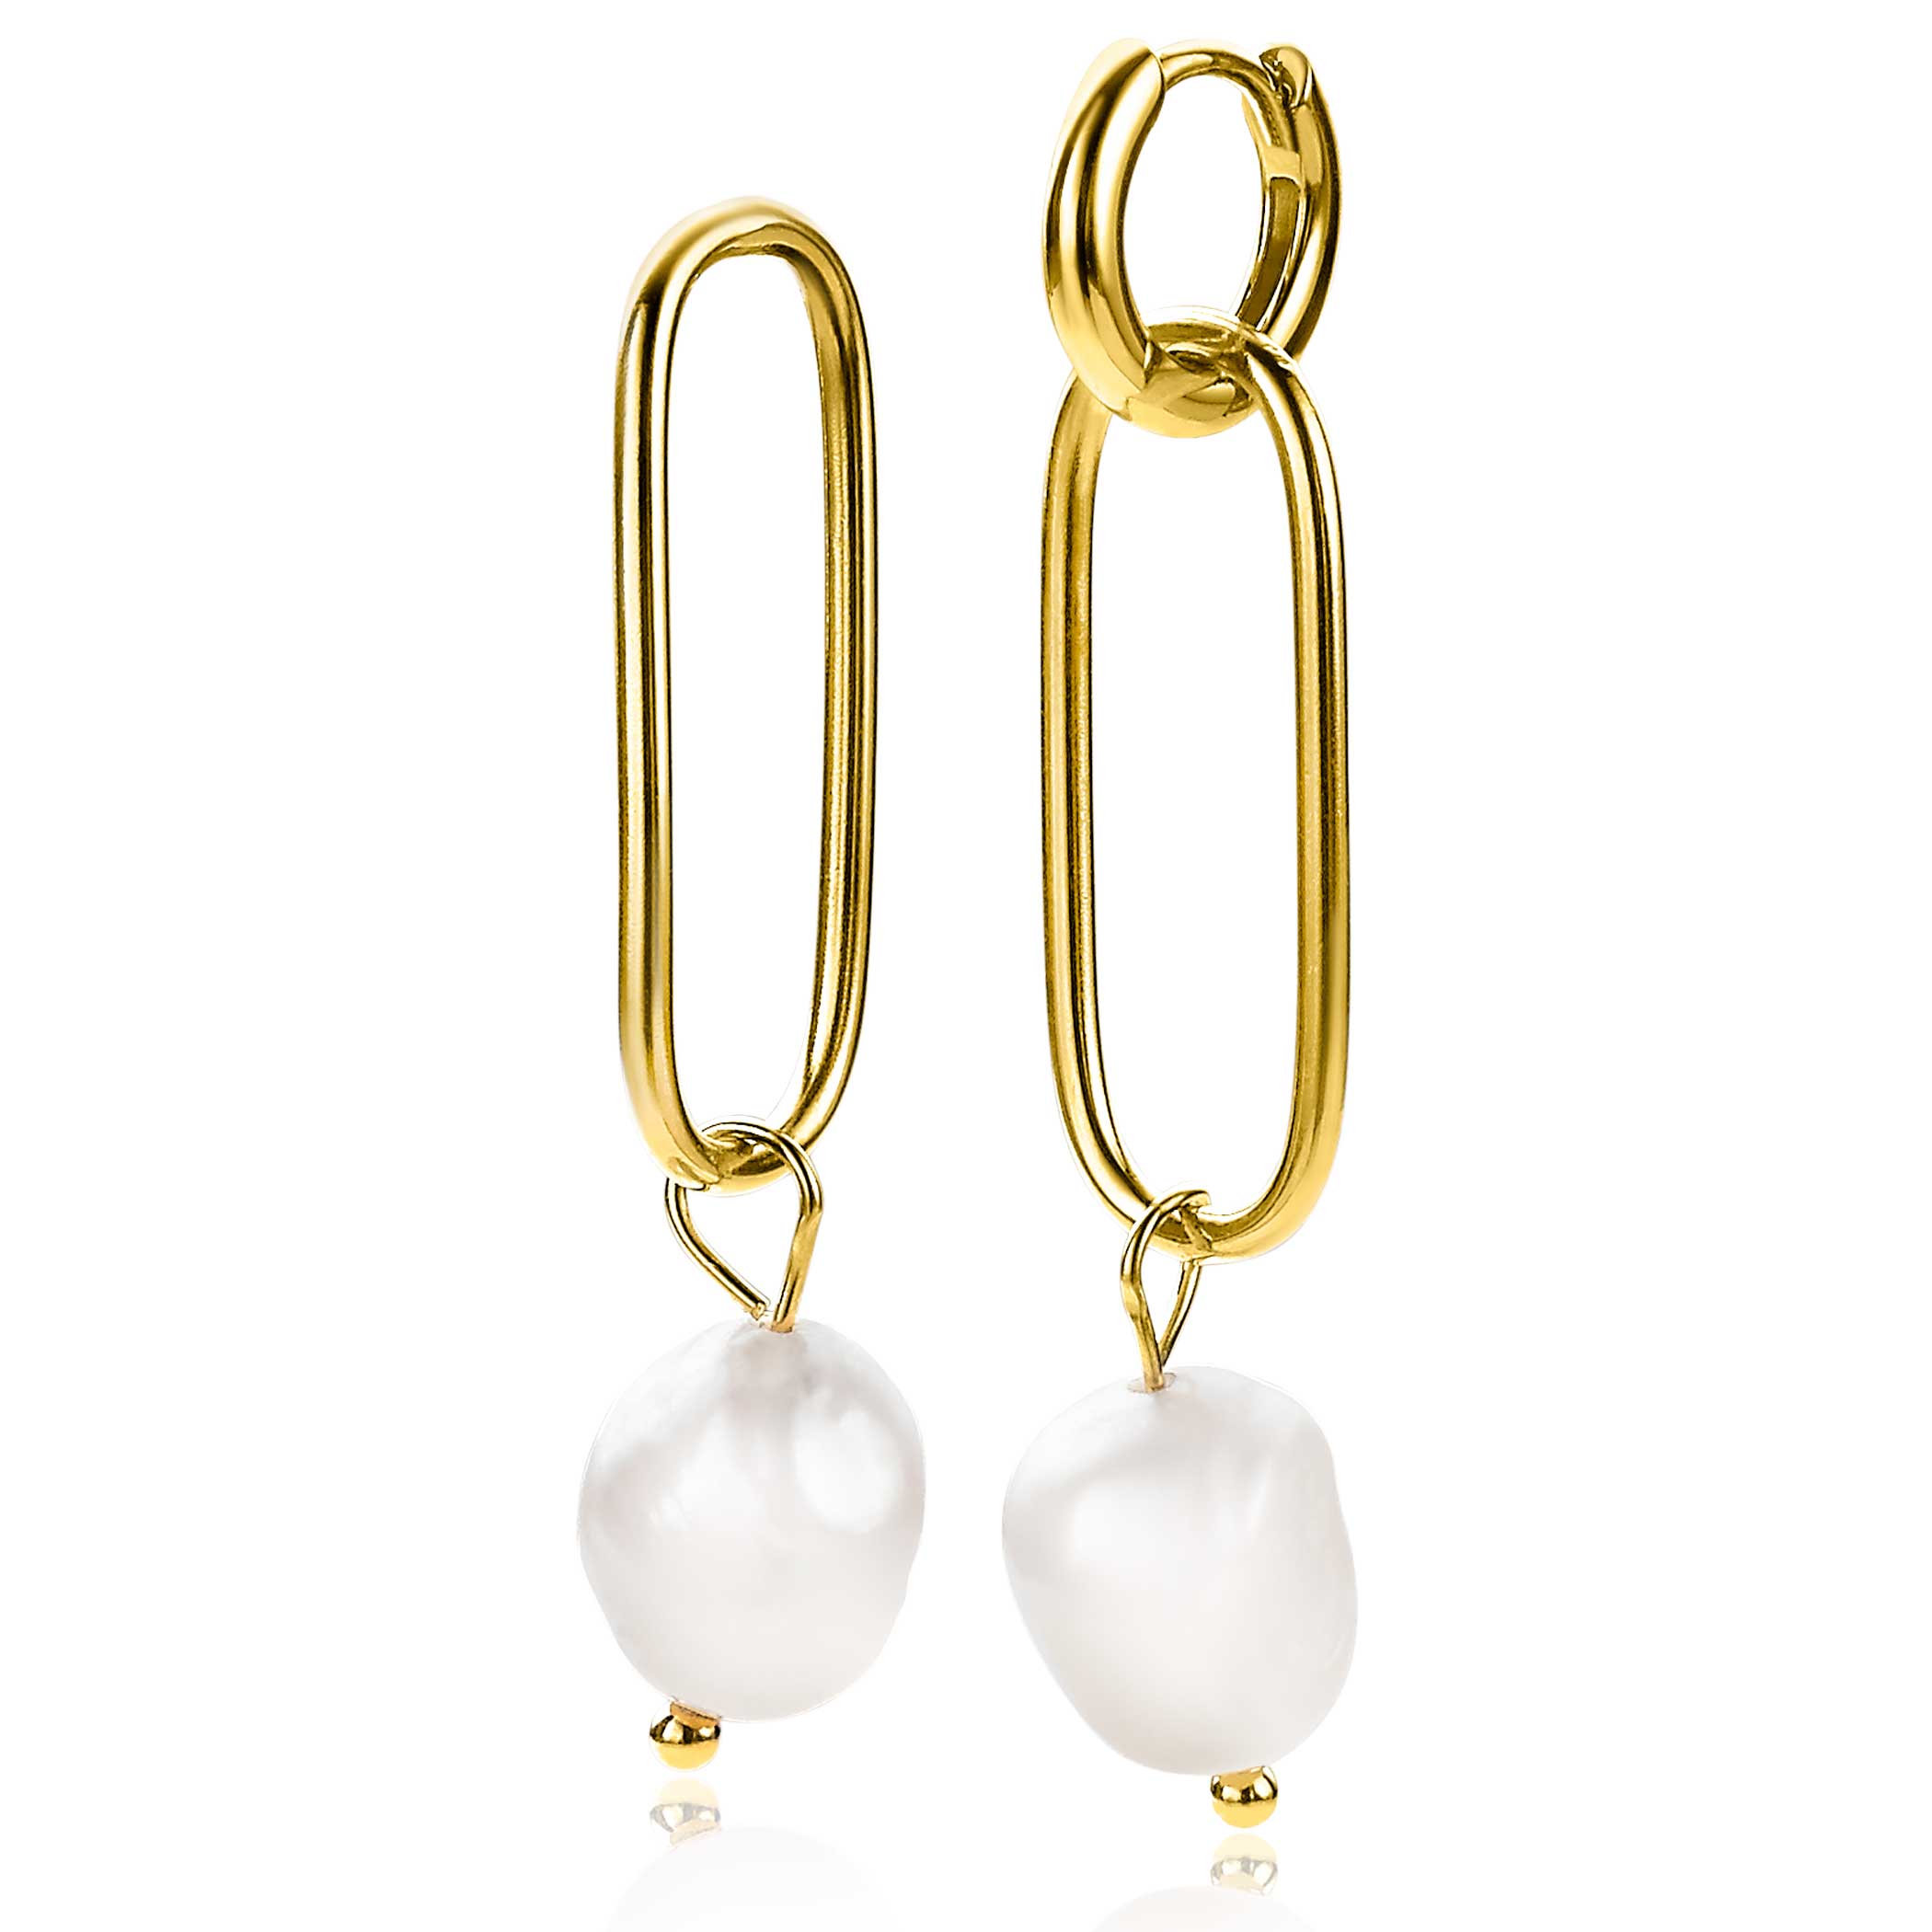 43mm ZINZI Gold Plated Sterling Silver Earrings Pendants Oval White Pearl ZICH2188G (excl. hoop earrings)